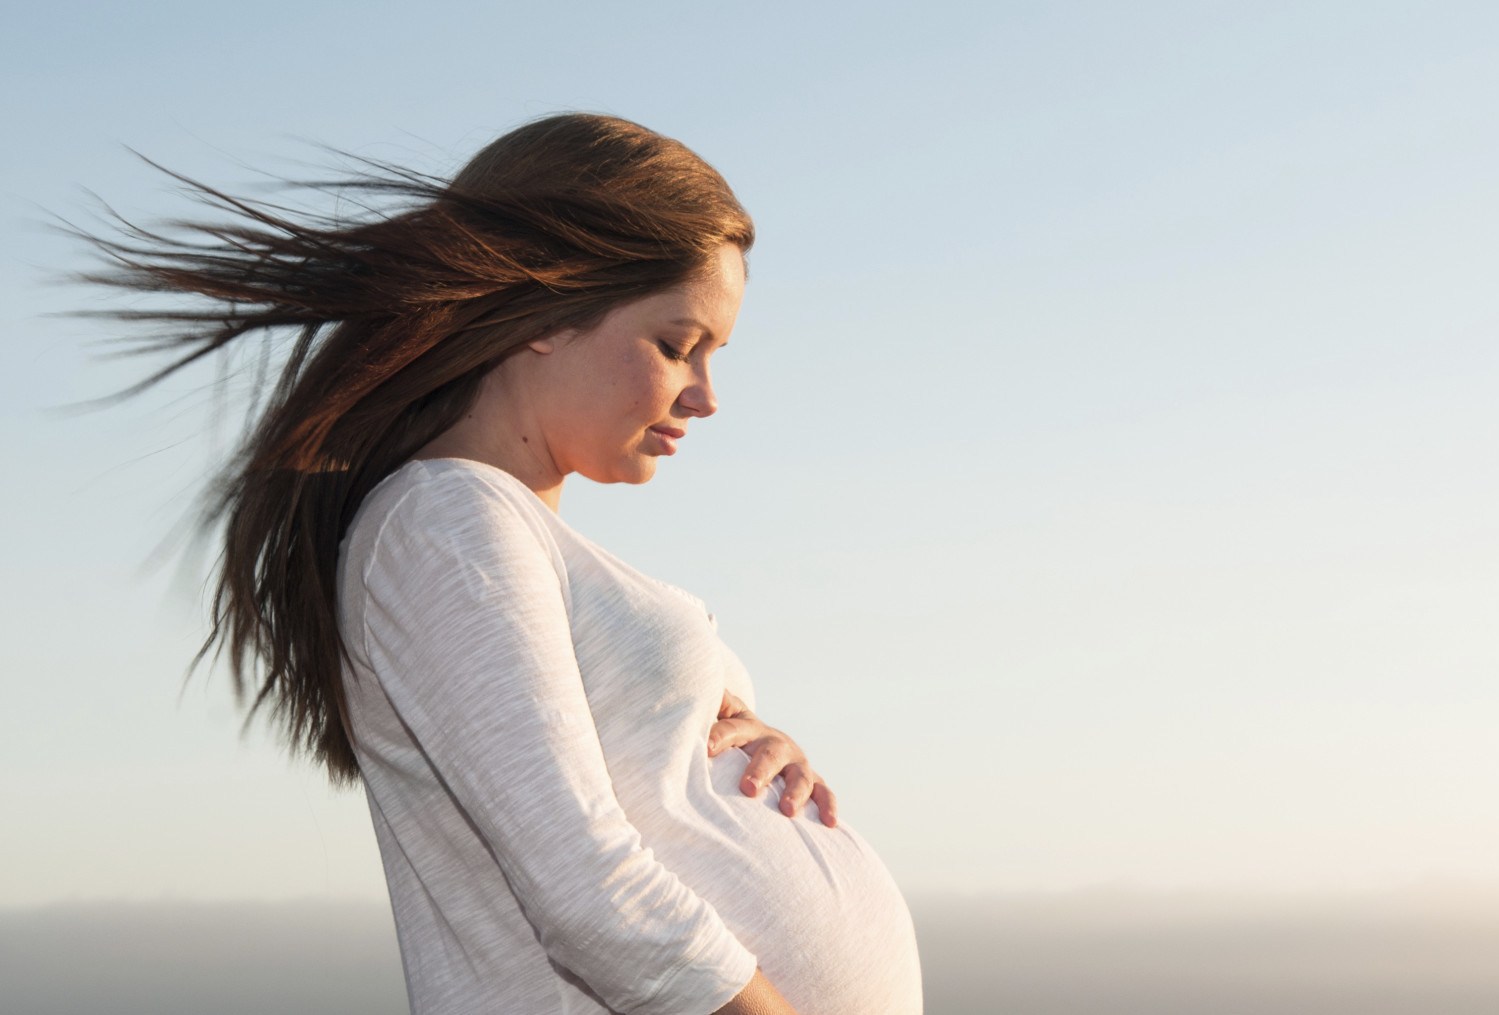 New York Legalizes The Gestational Surrogacy Procedure